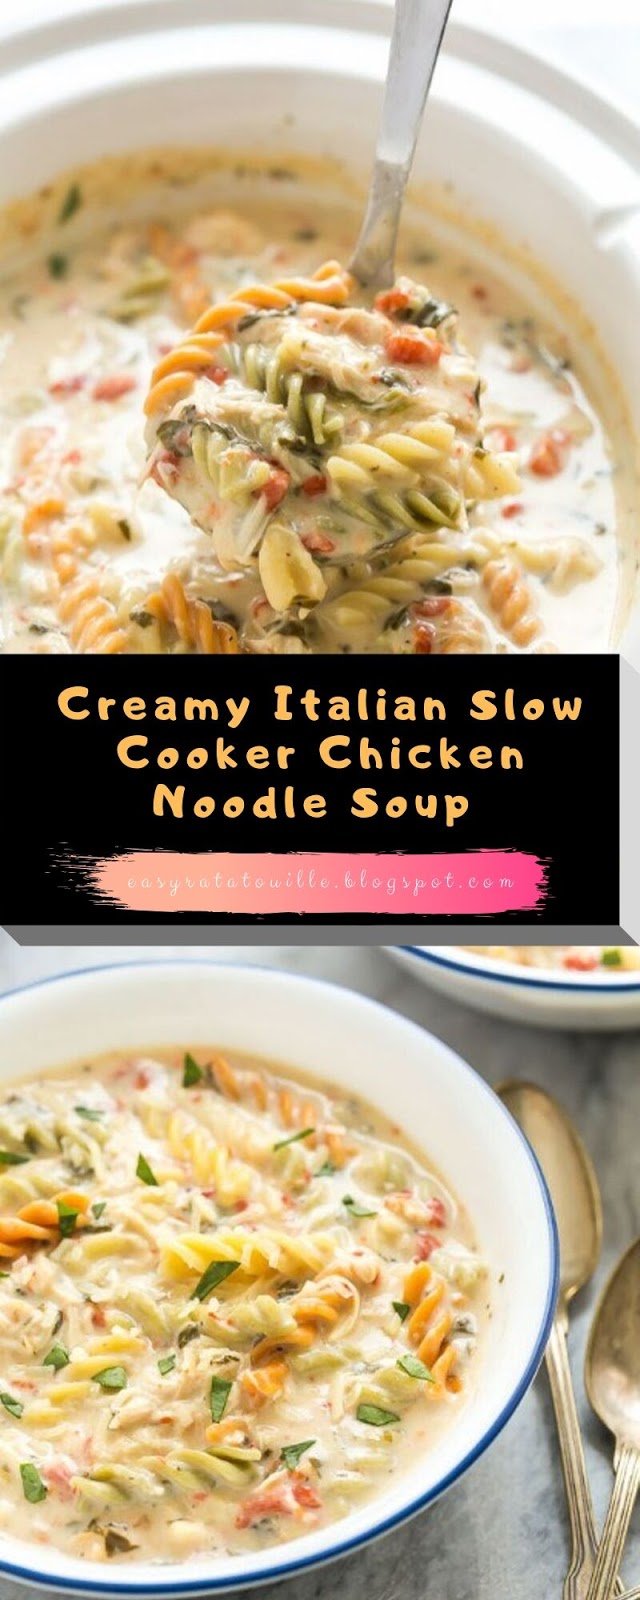 Creamy Italian Slow Cooker Chicken Noodle Soup